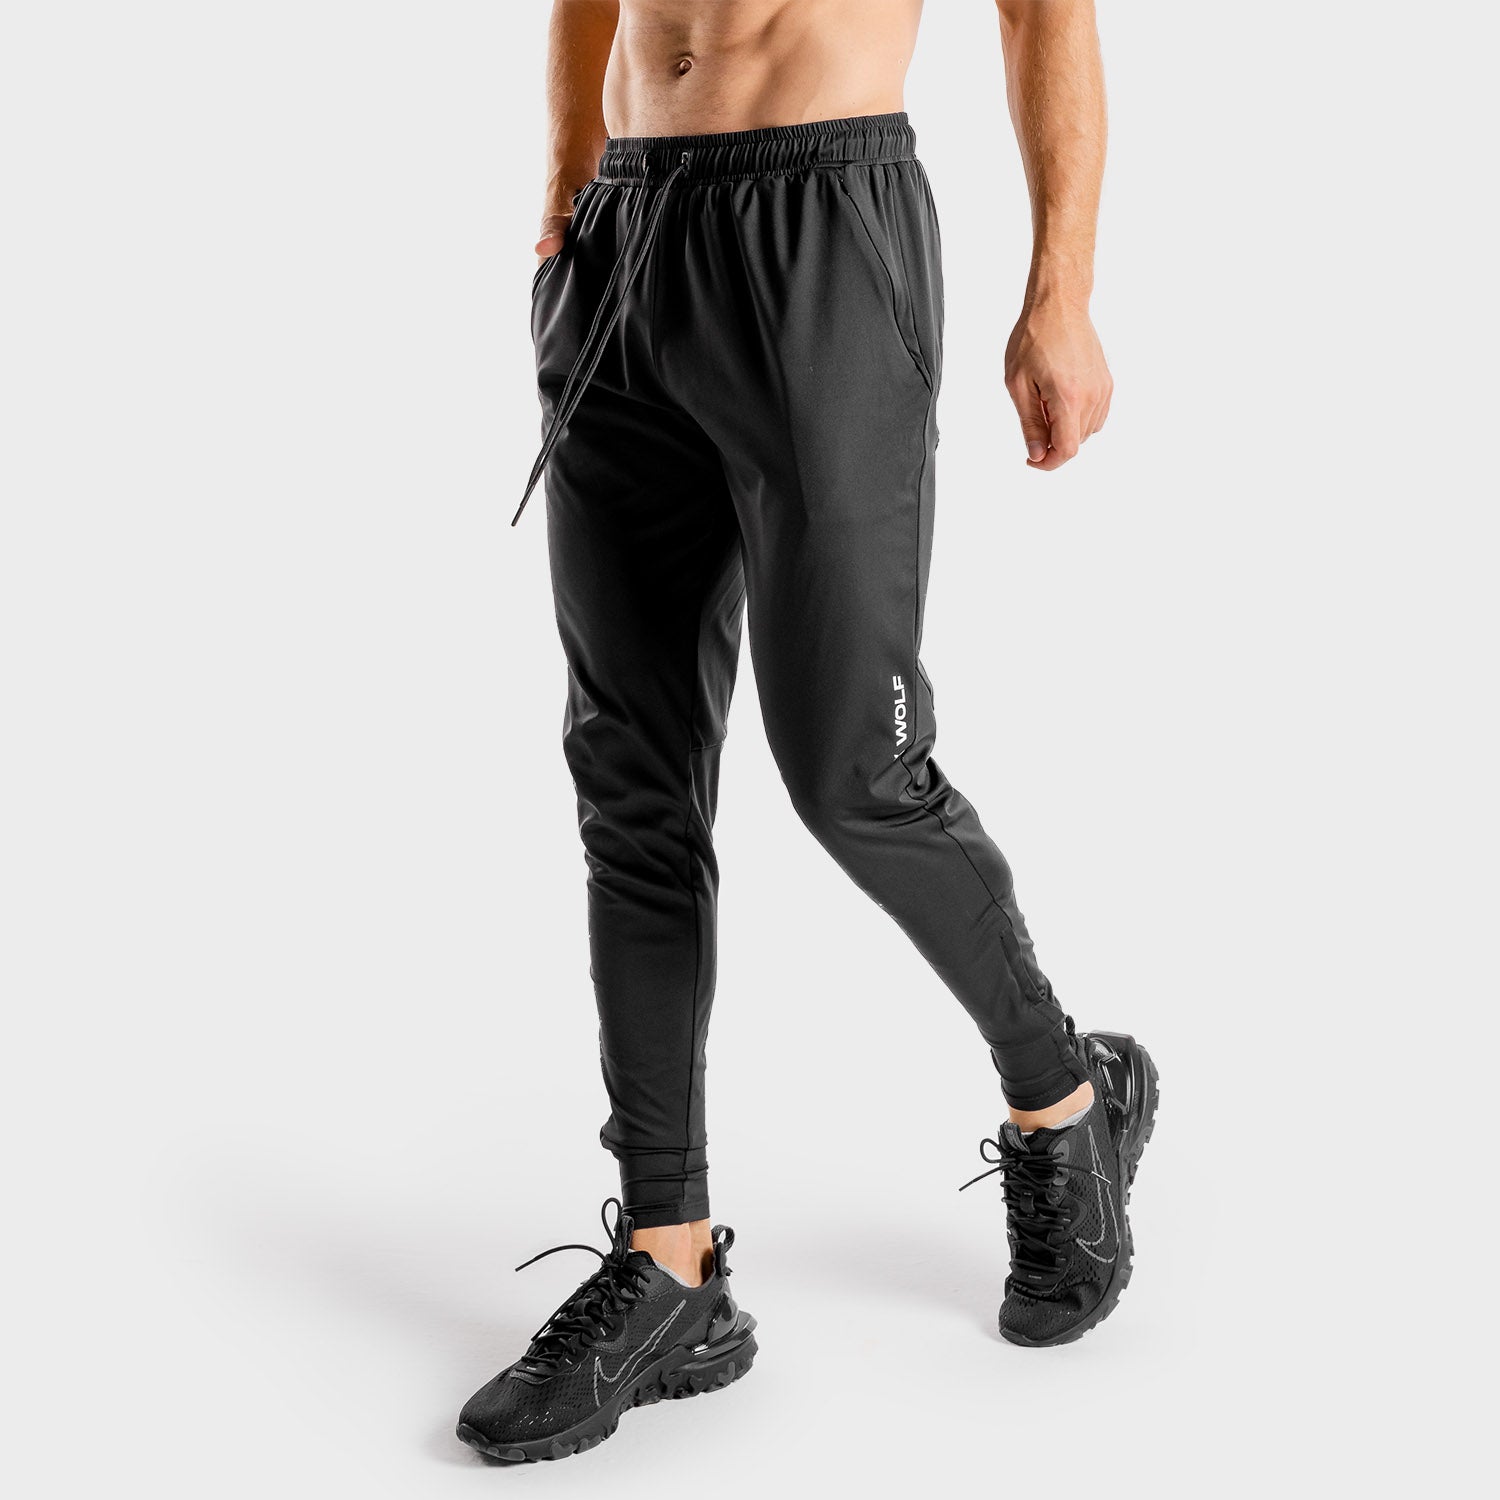 squatwolf-workout-pants-for-men-wolf-track-pants-black-track-pants